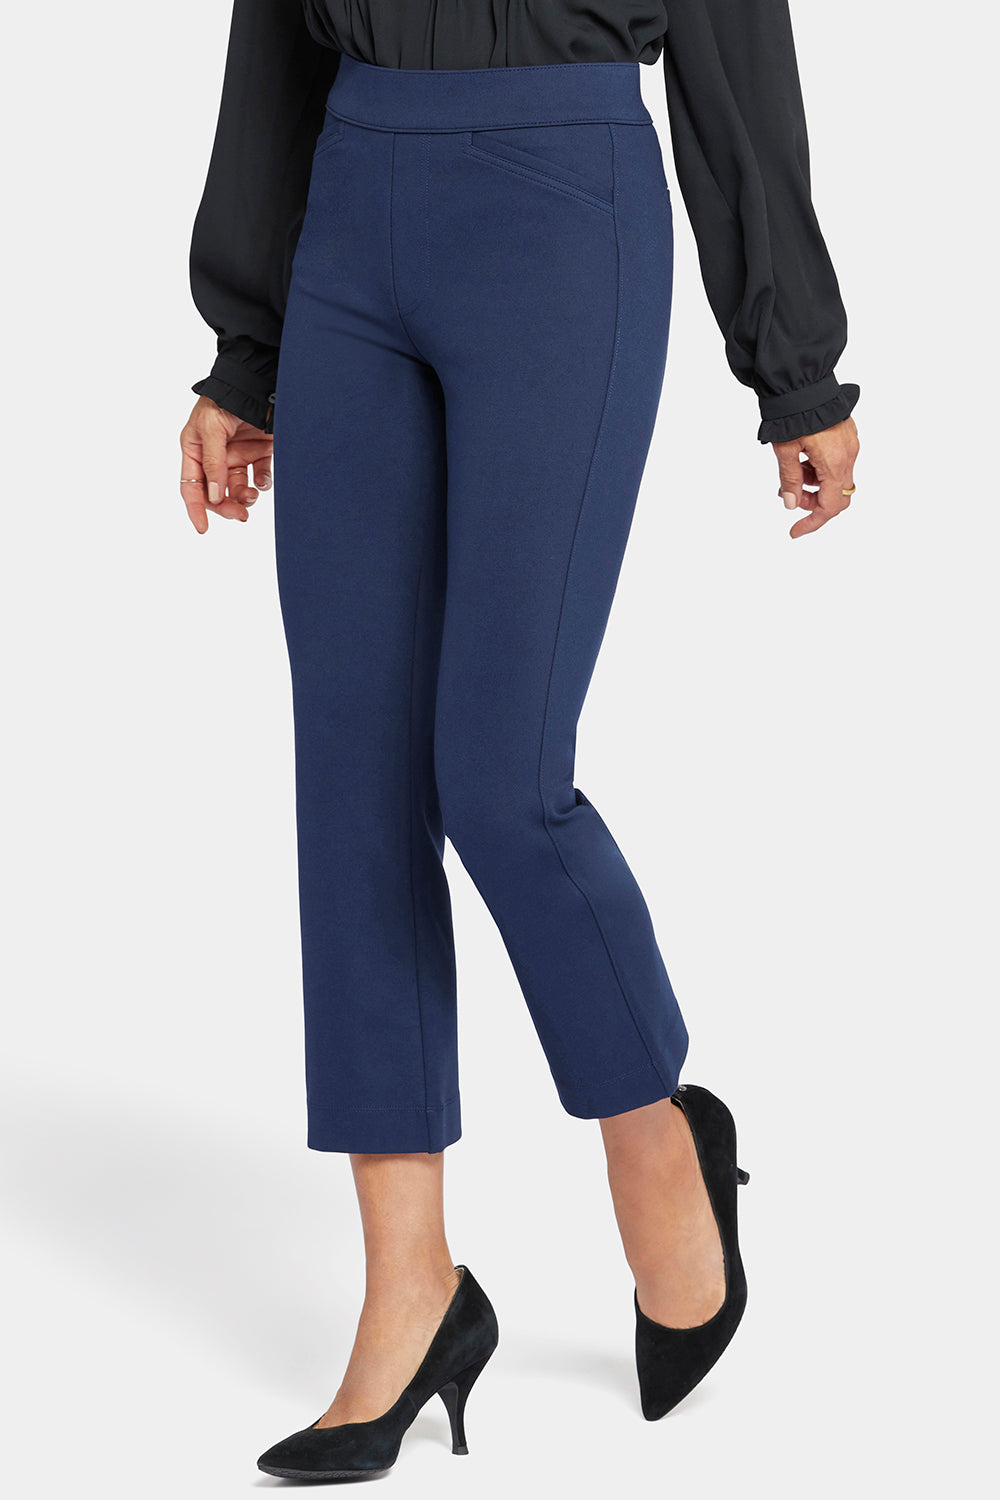 ZELOS Navy Cropped Capri Pull On Activewear Pants - Women's Size XL